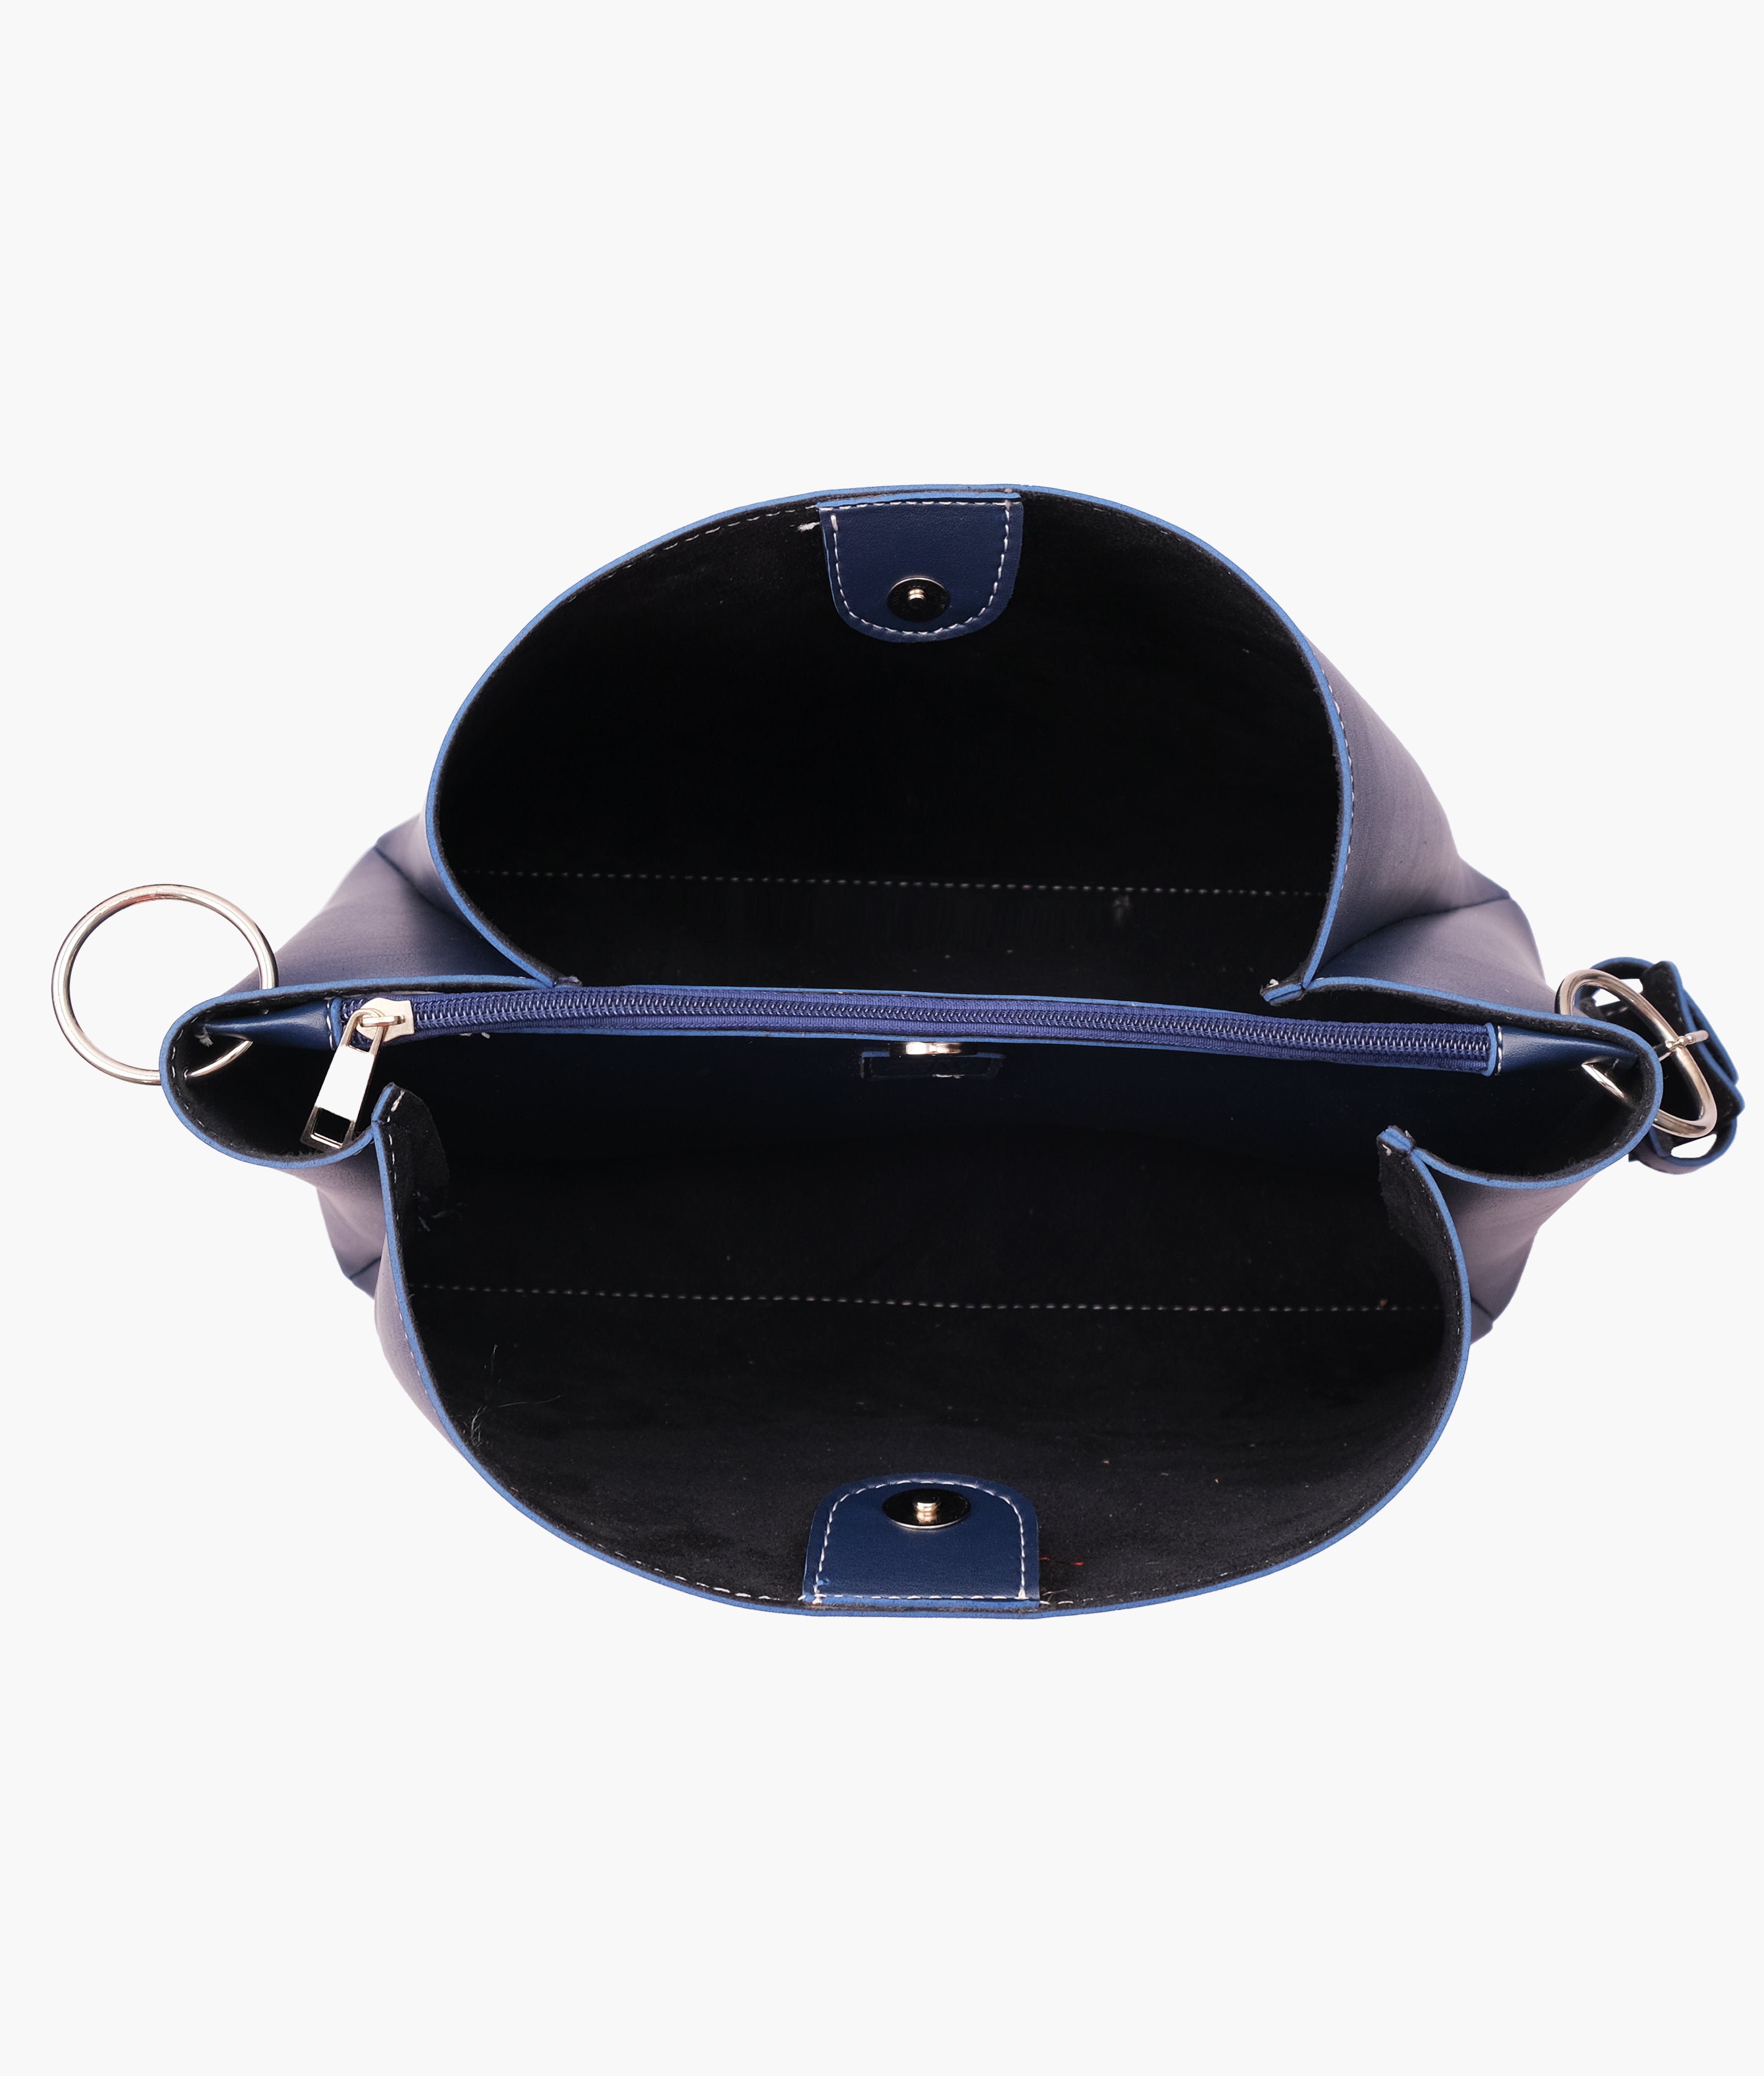 Blue handbag with braided handle